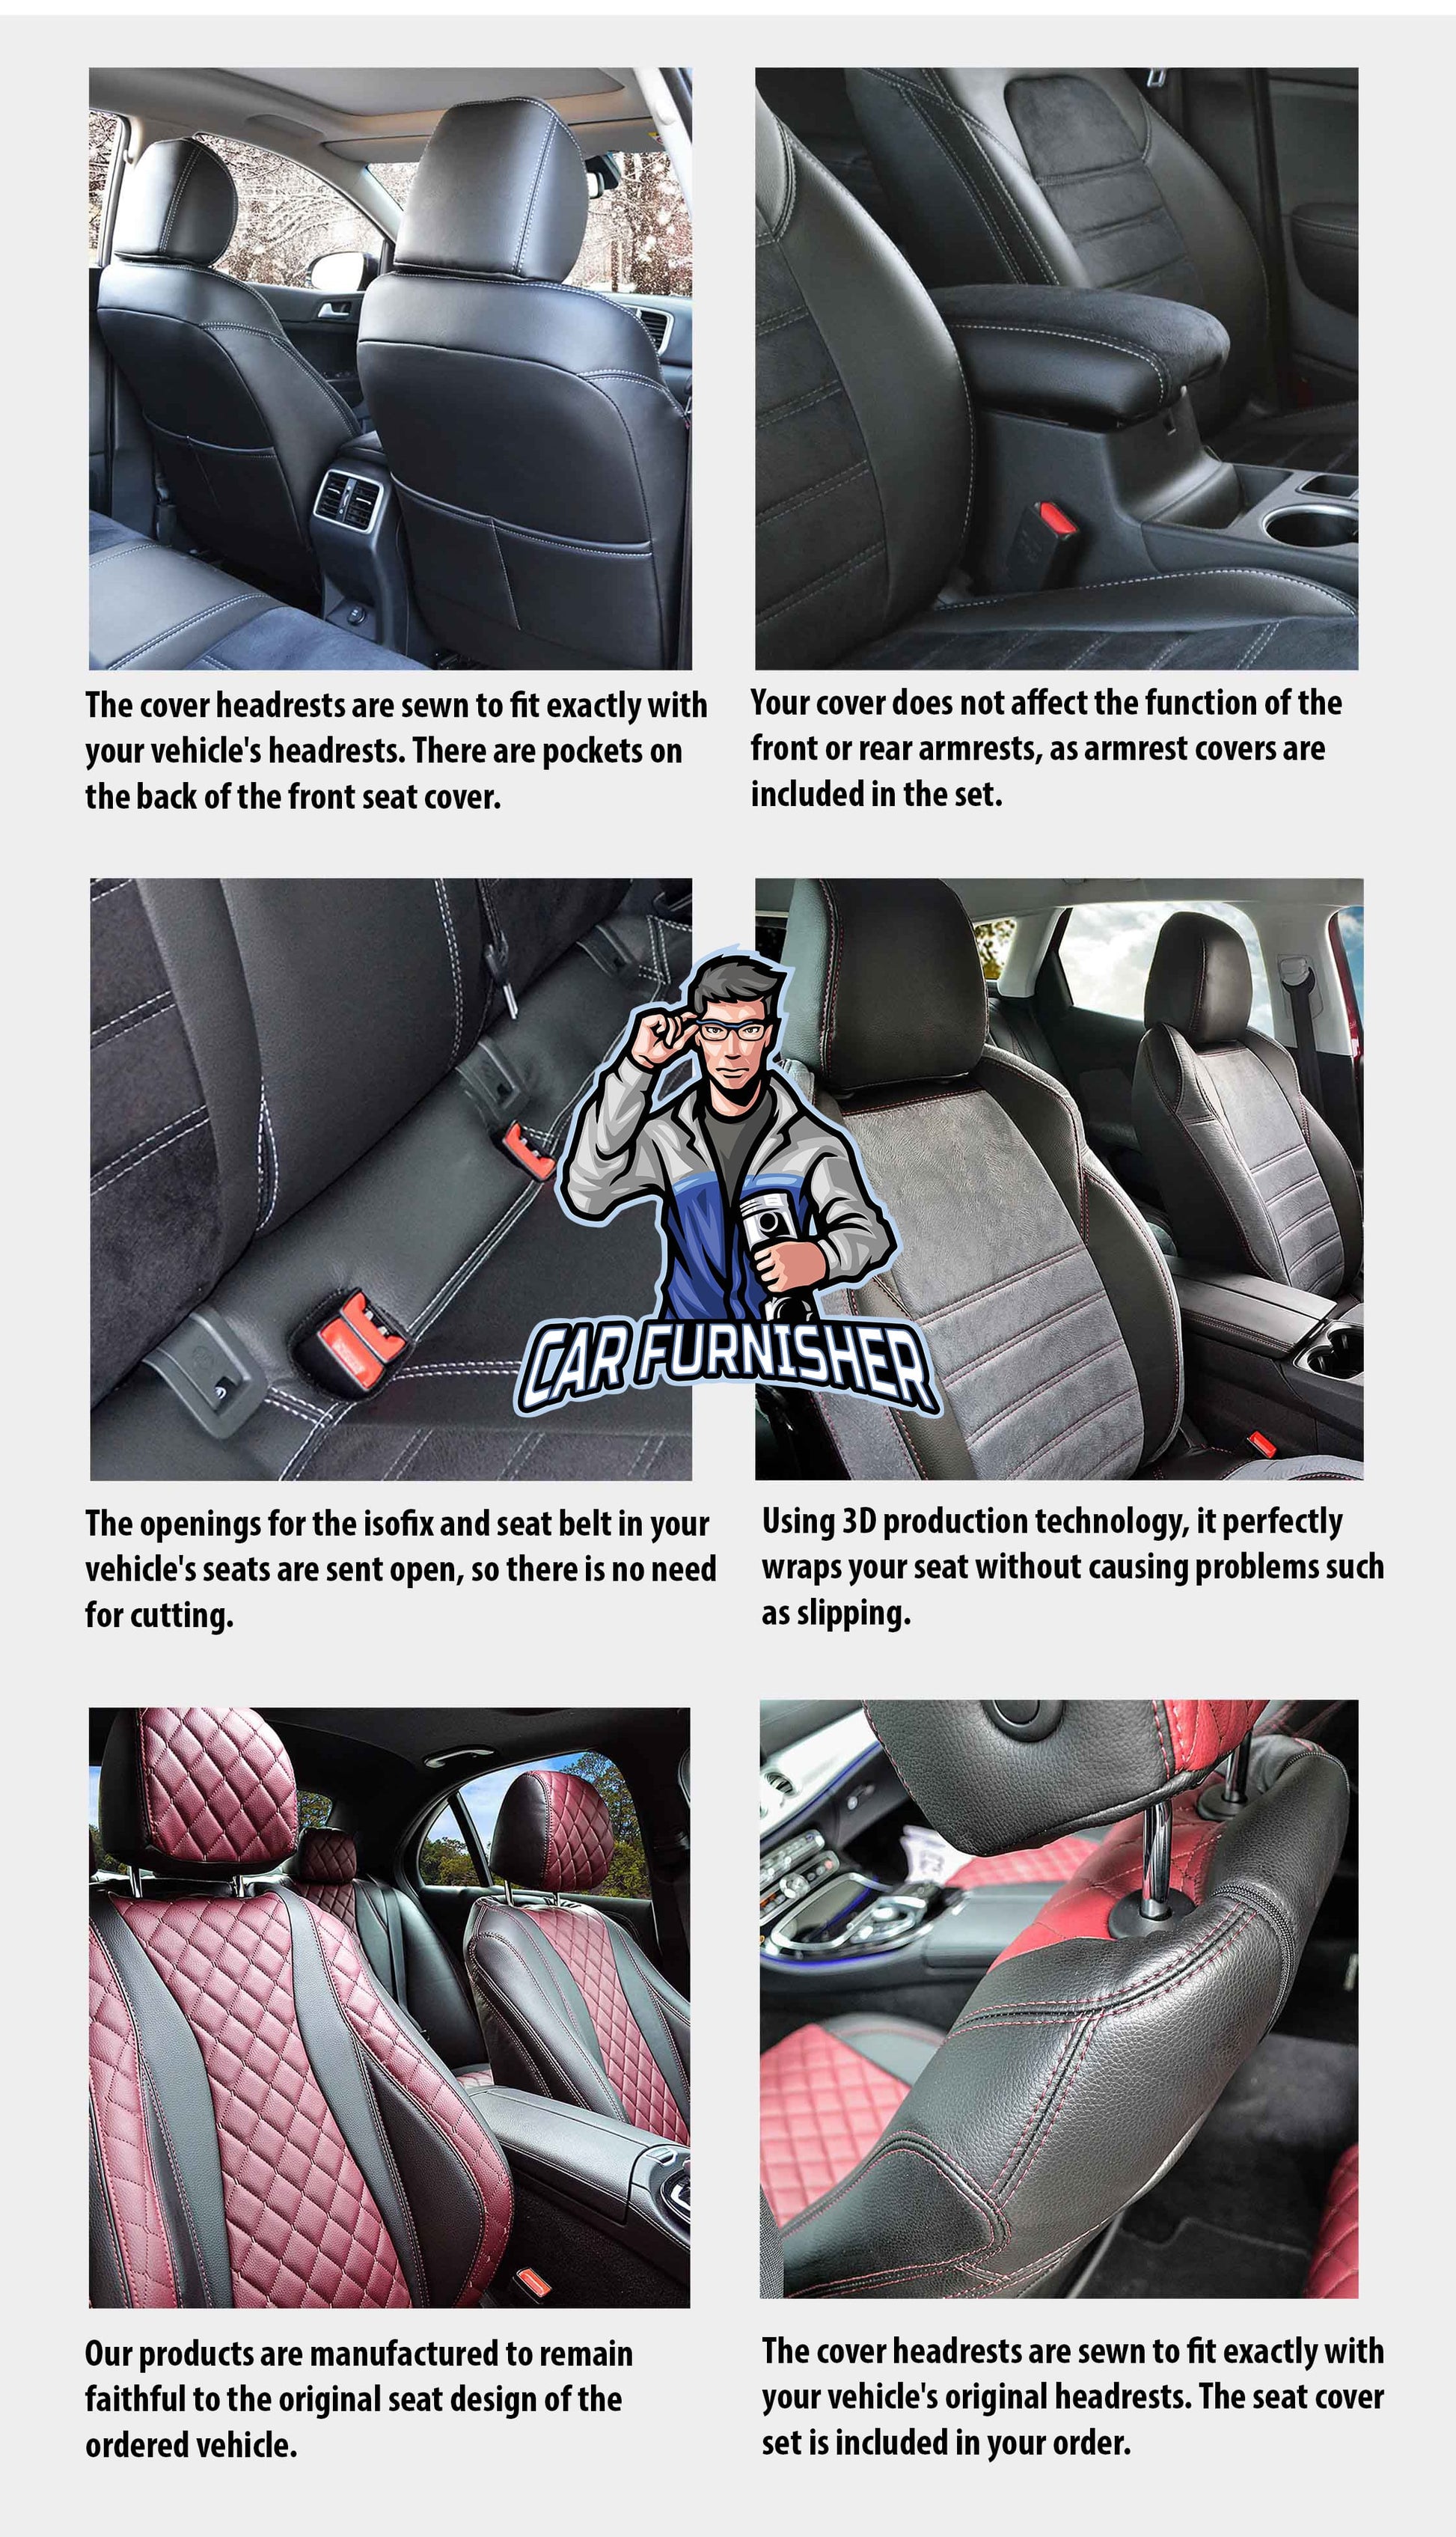 Mitsubishi Lancer Car Seat Covers 2003-2017 Tokyo Design Beige Full Set (5 Seats + Handrest) Full Leather